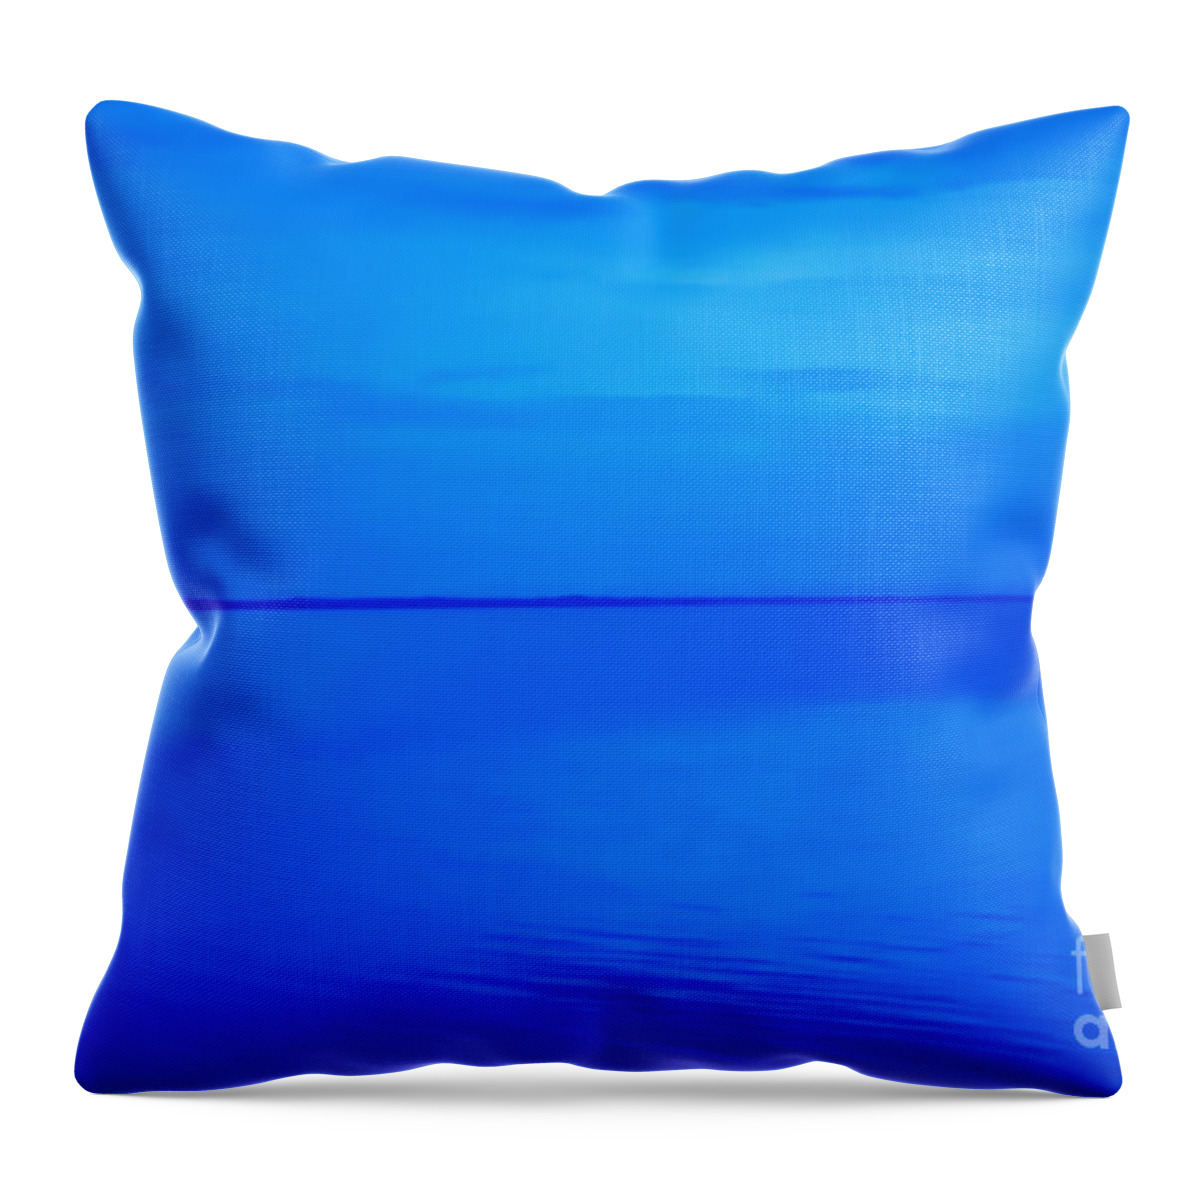 Blue Ocean Twilight Throw Pillow featuring the photograph Blue Ocean Twilight by Randy Steele